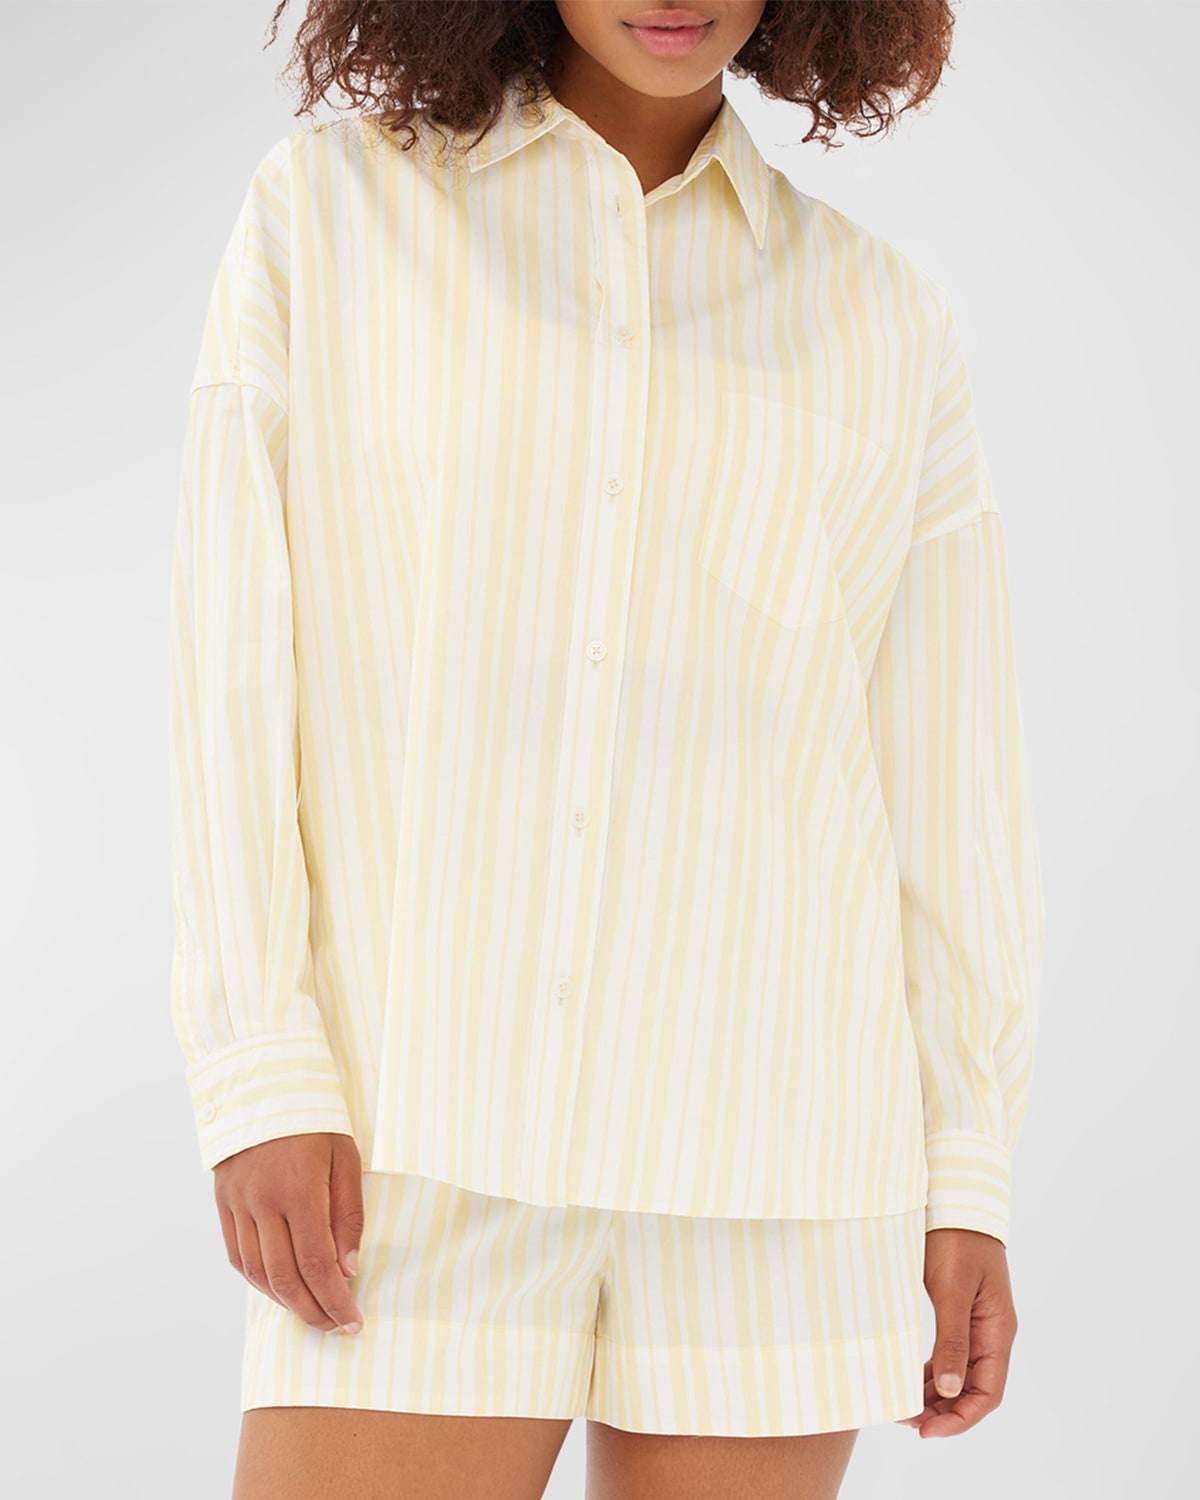 The Chiara Classic Cotton Stripe Button-Front Shirt